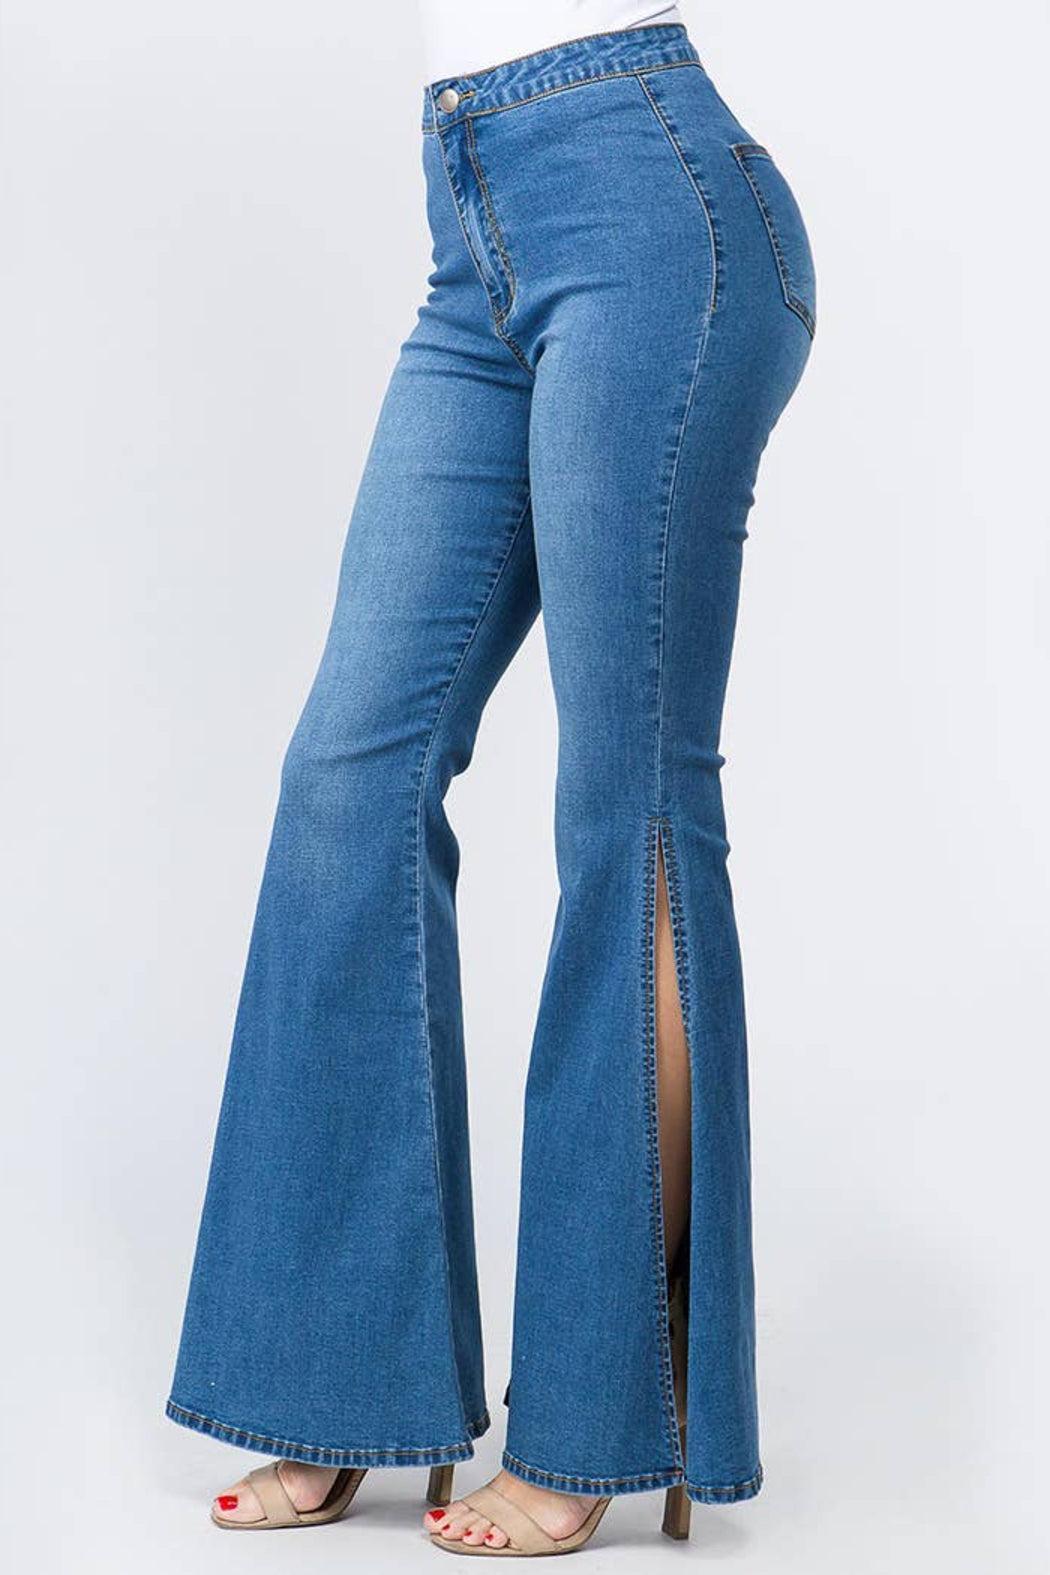 Plus Size High Waist Bell Bottom Slit Denim Jeans Product Image